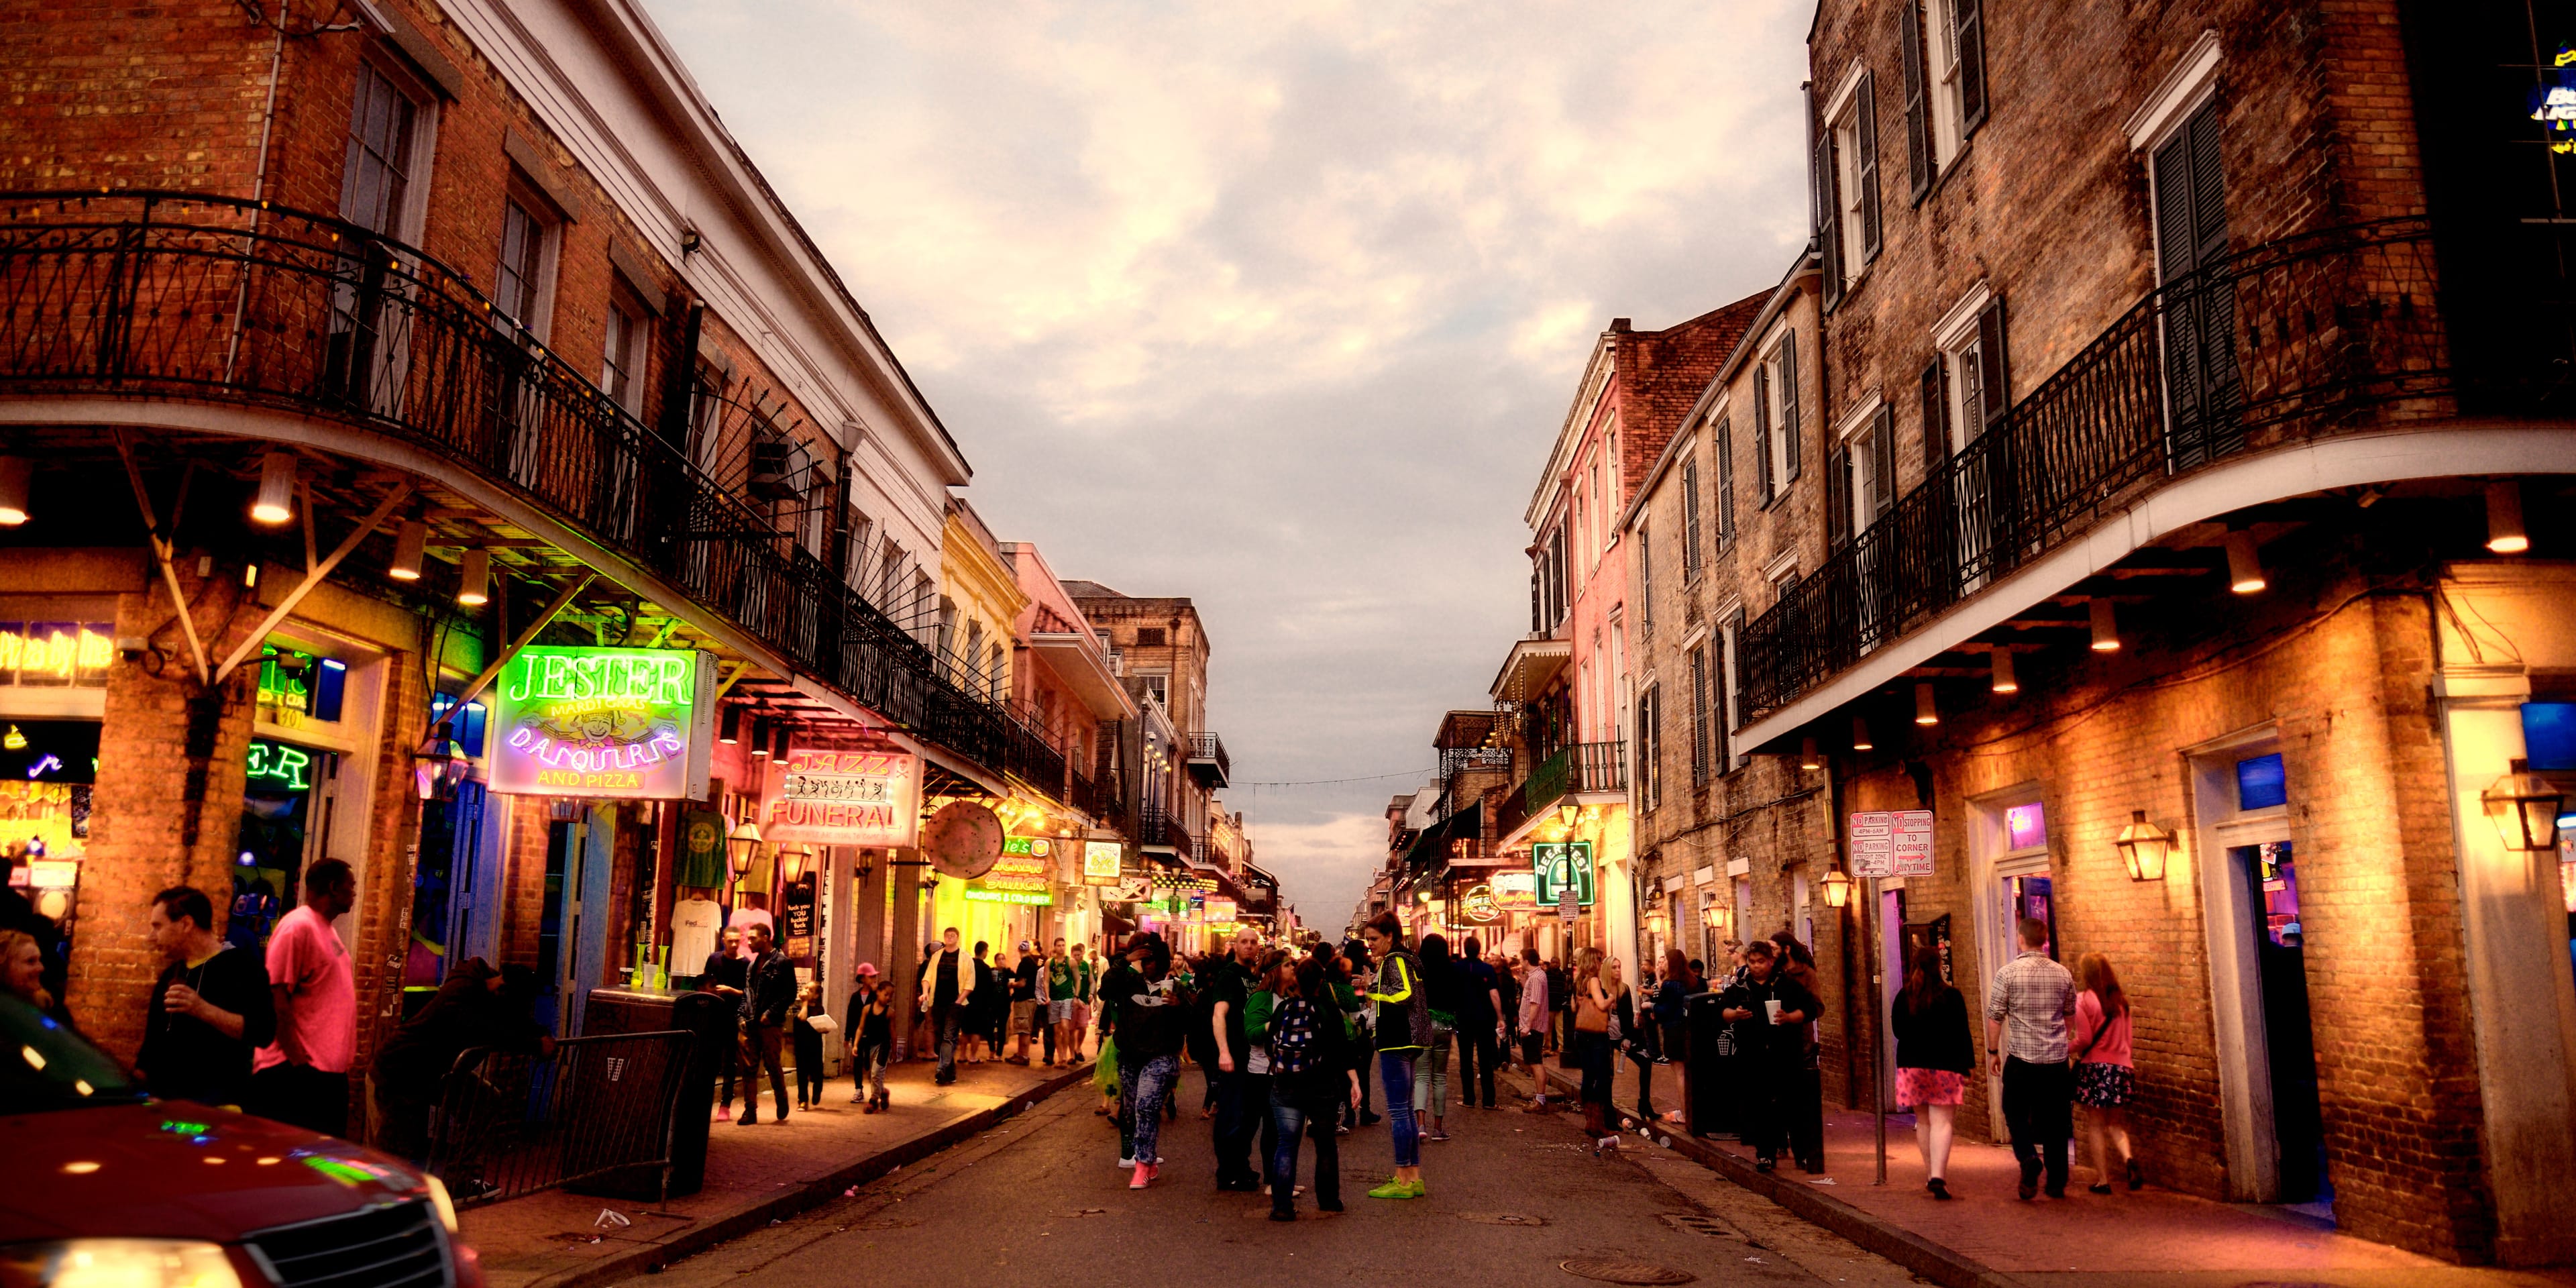 Street in New Orleans, Louisiana